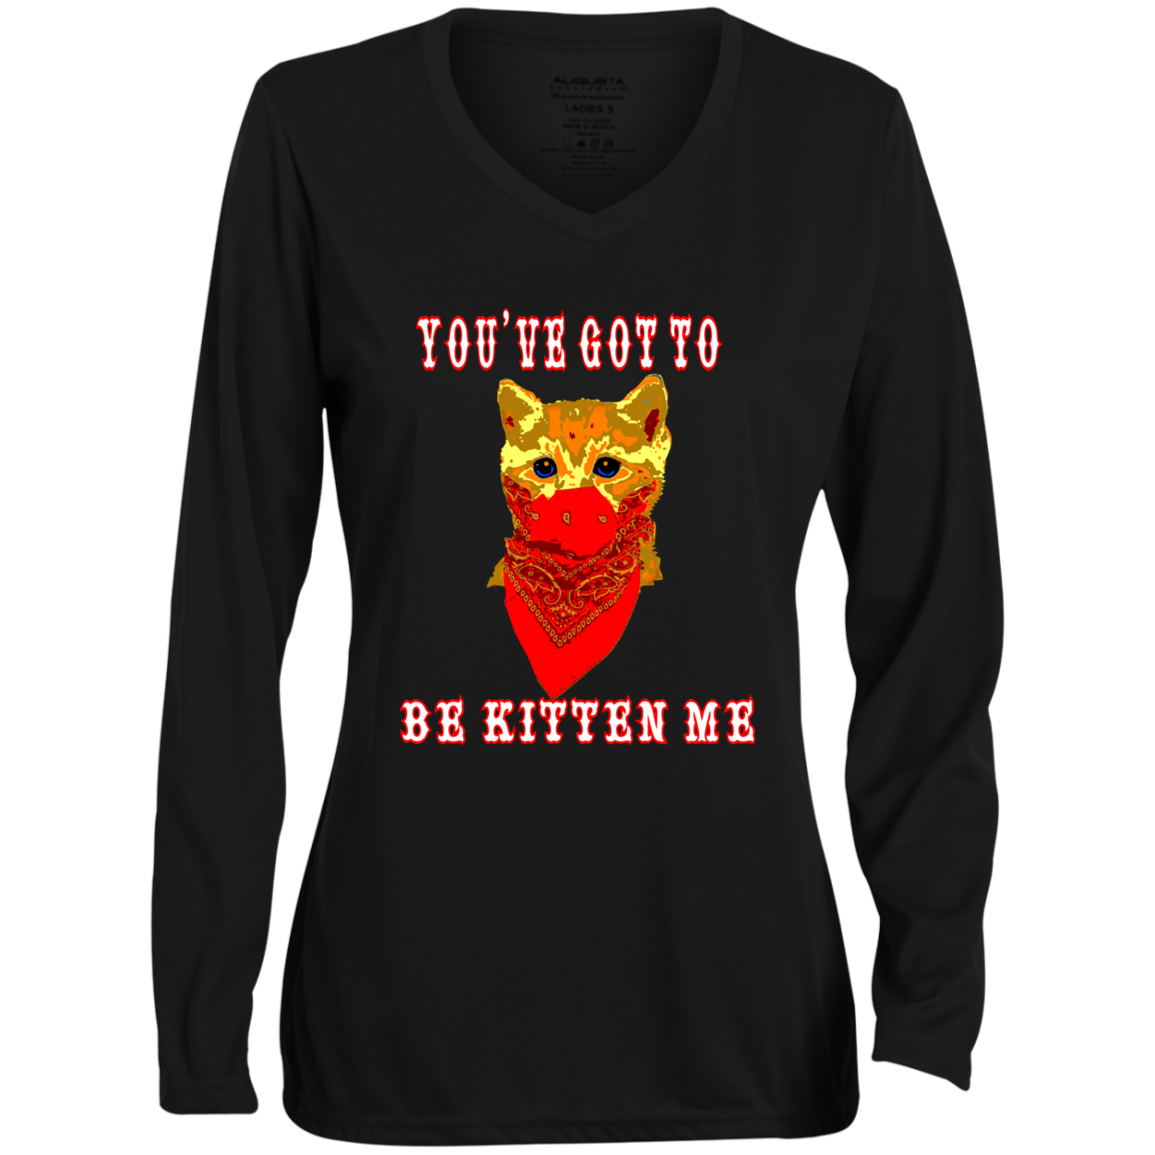 ArtichokeUSA Custom Design. You've Got To Be Kitten Me?! 2020, Not What We Expected. Ladies' Moisture-Wicking Long Sleeve V-Neck Tee